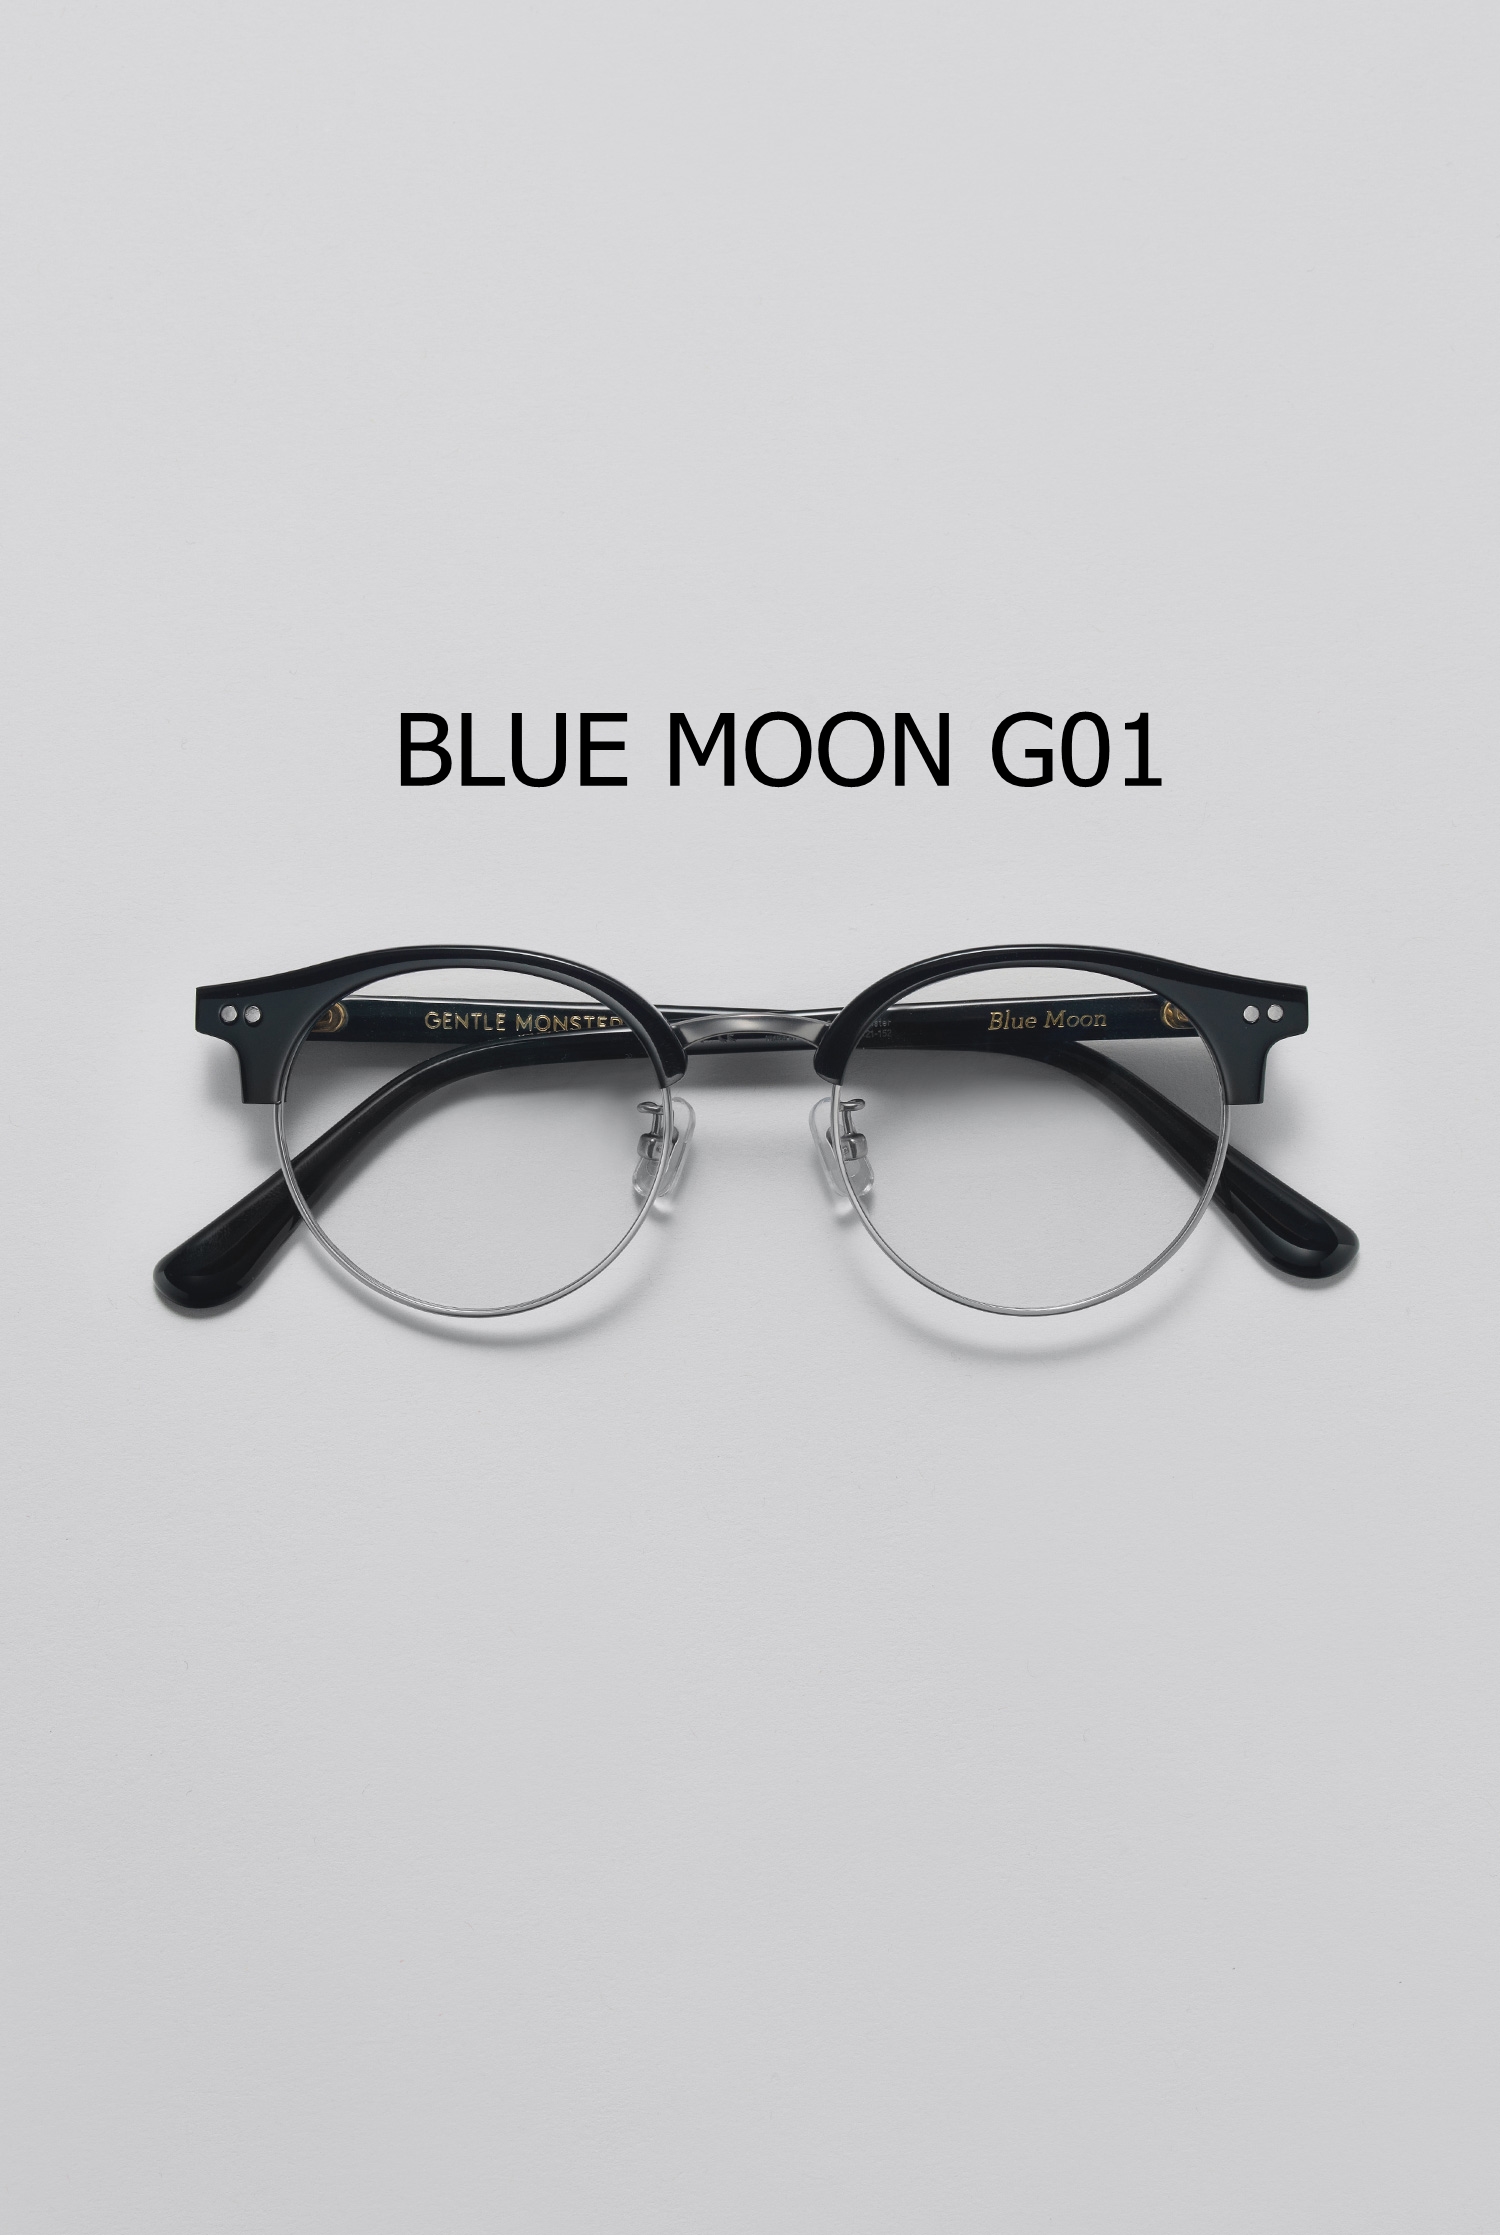 BLUE MOON G01